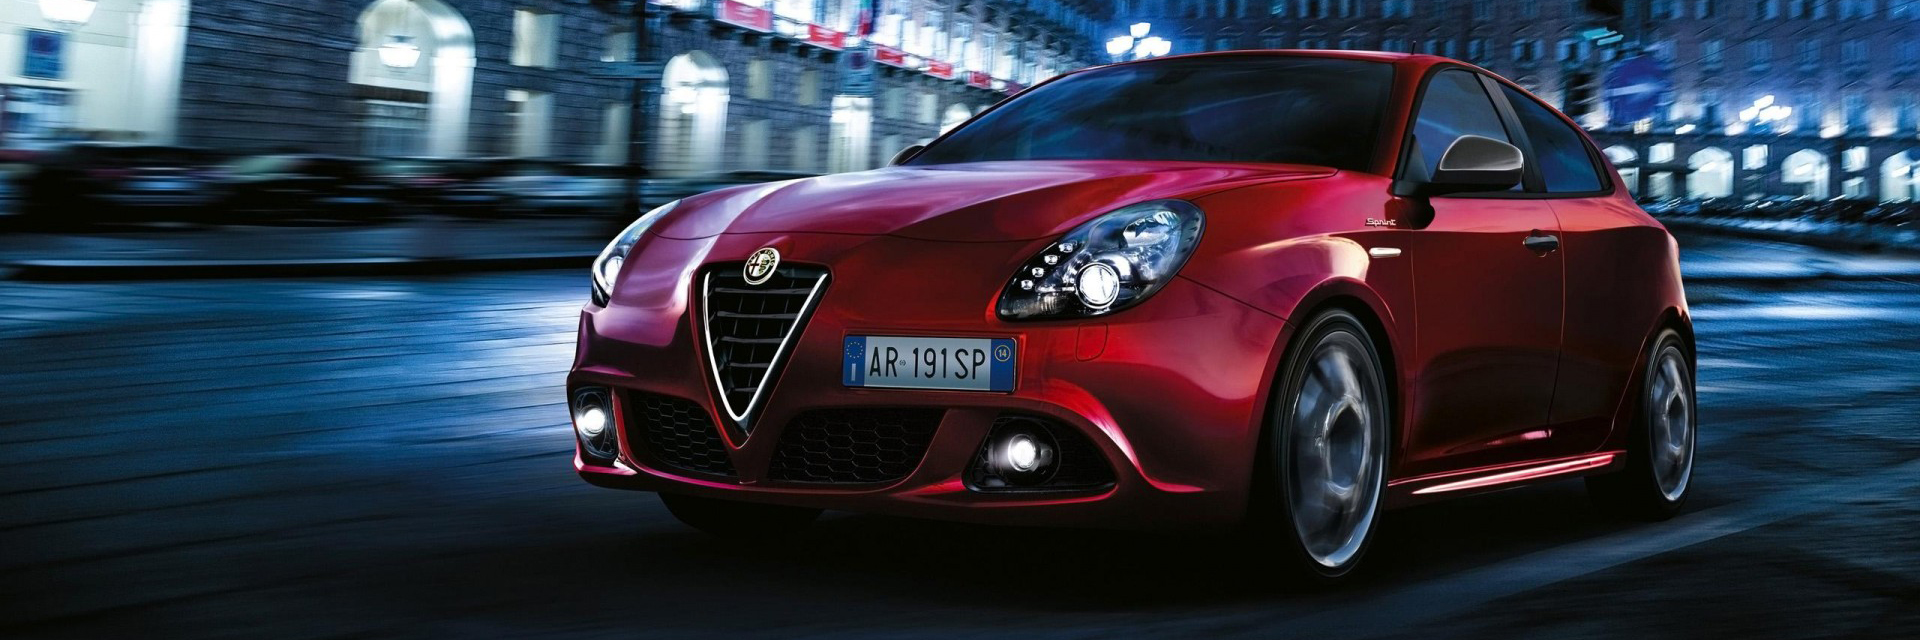 Alfa Romeo Giulietta, Giulietta, Alfa Romeo, Santogal Alfa Romeo, carros serviço, carros usados